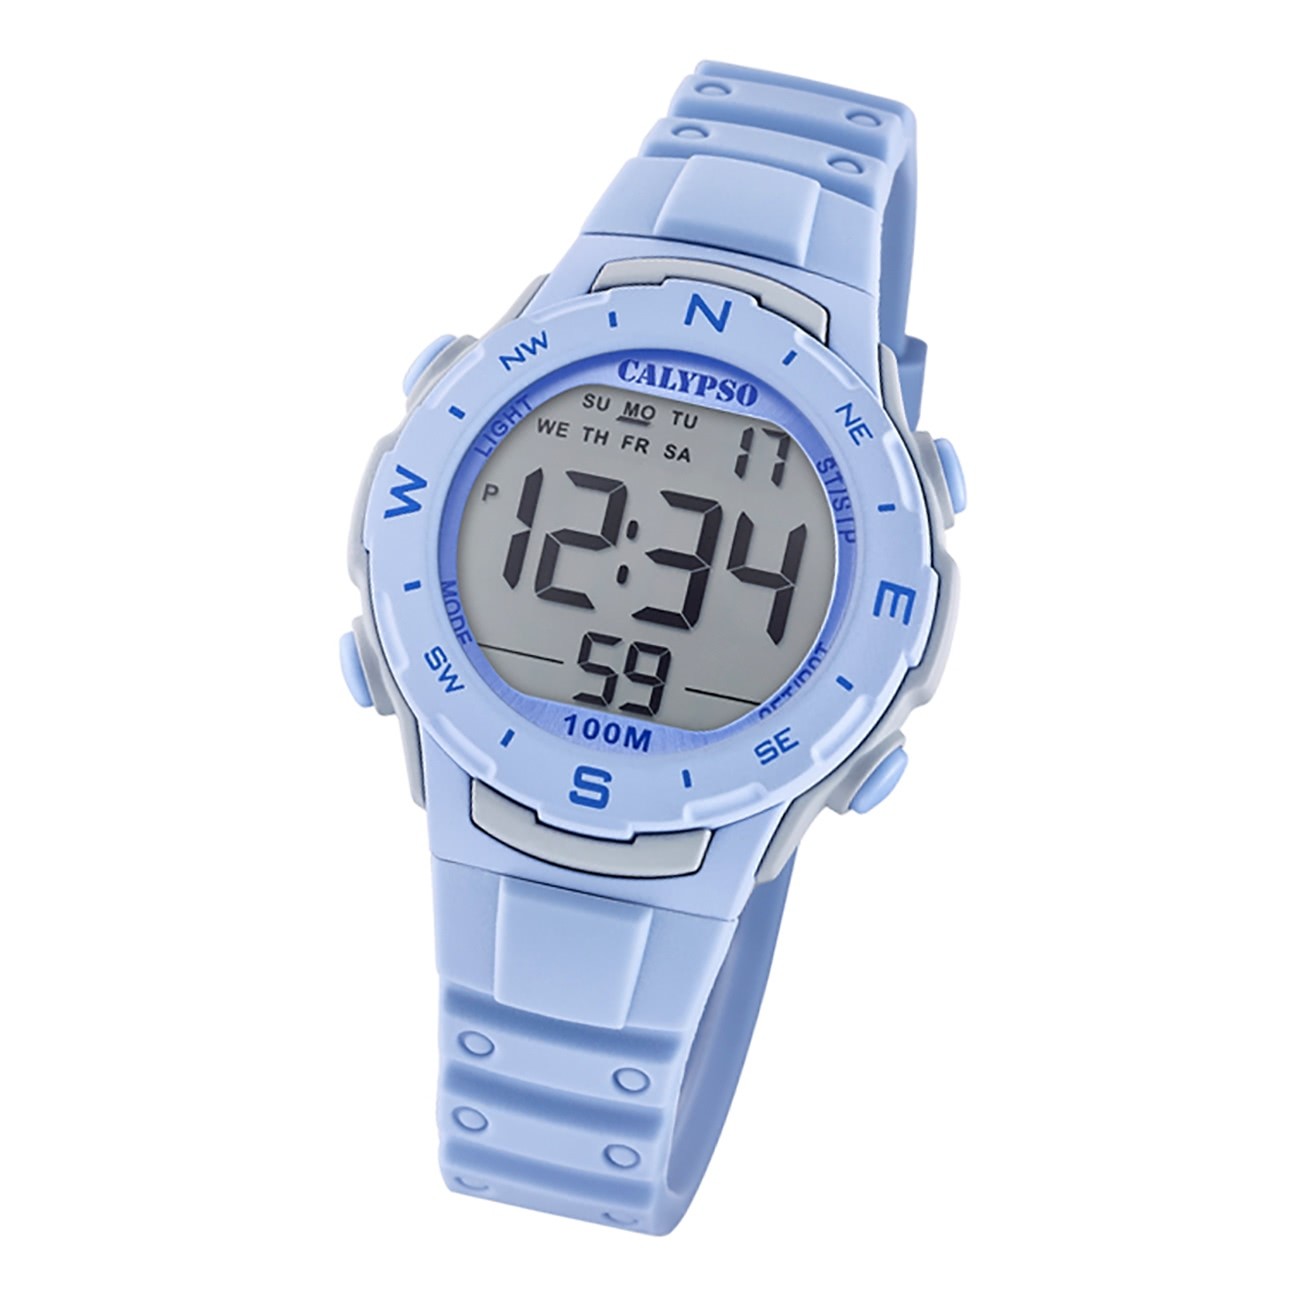 Calypso Damen Herren Armbanduhr K5801/2 Digital Kunststoff hellblau UK5801/2